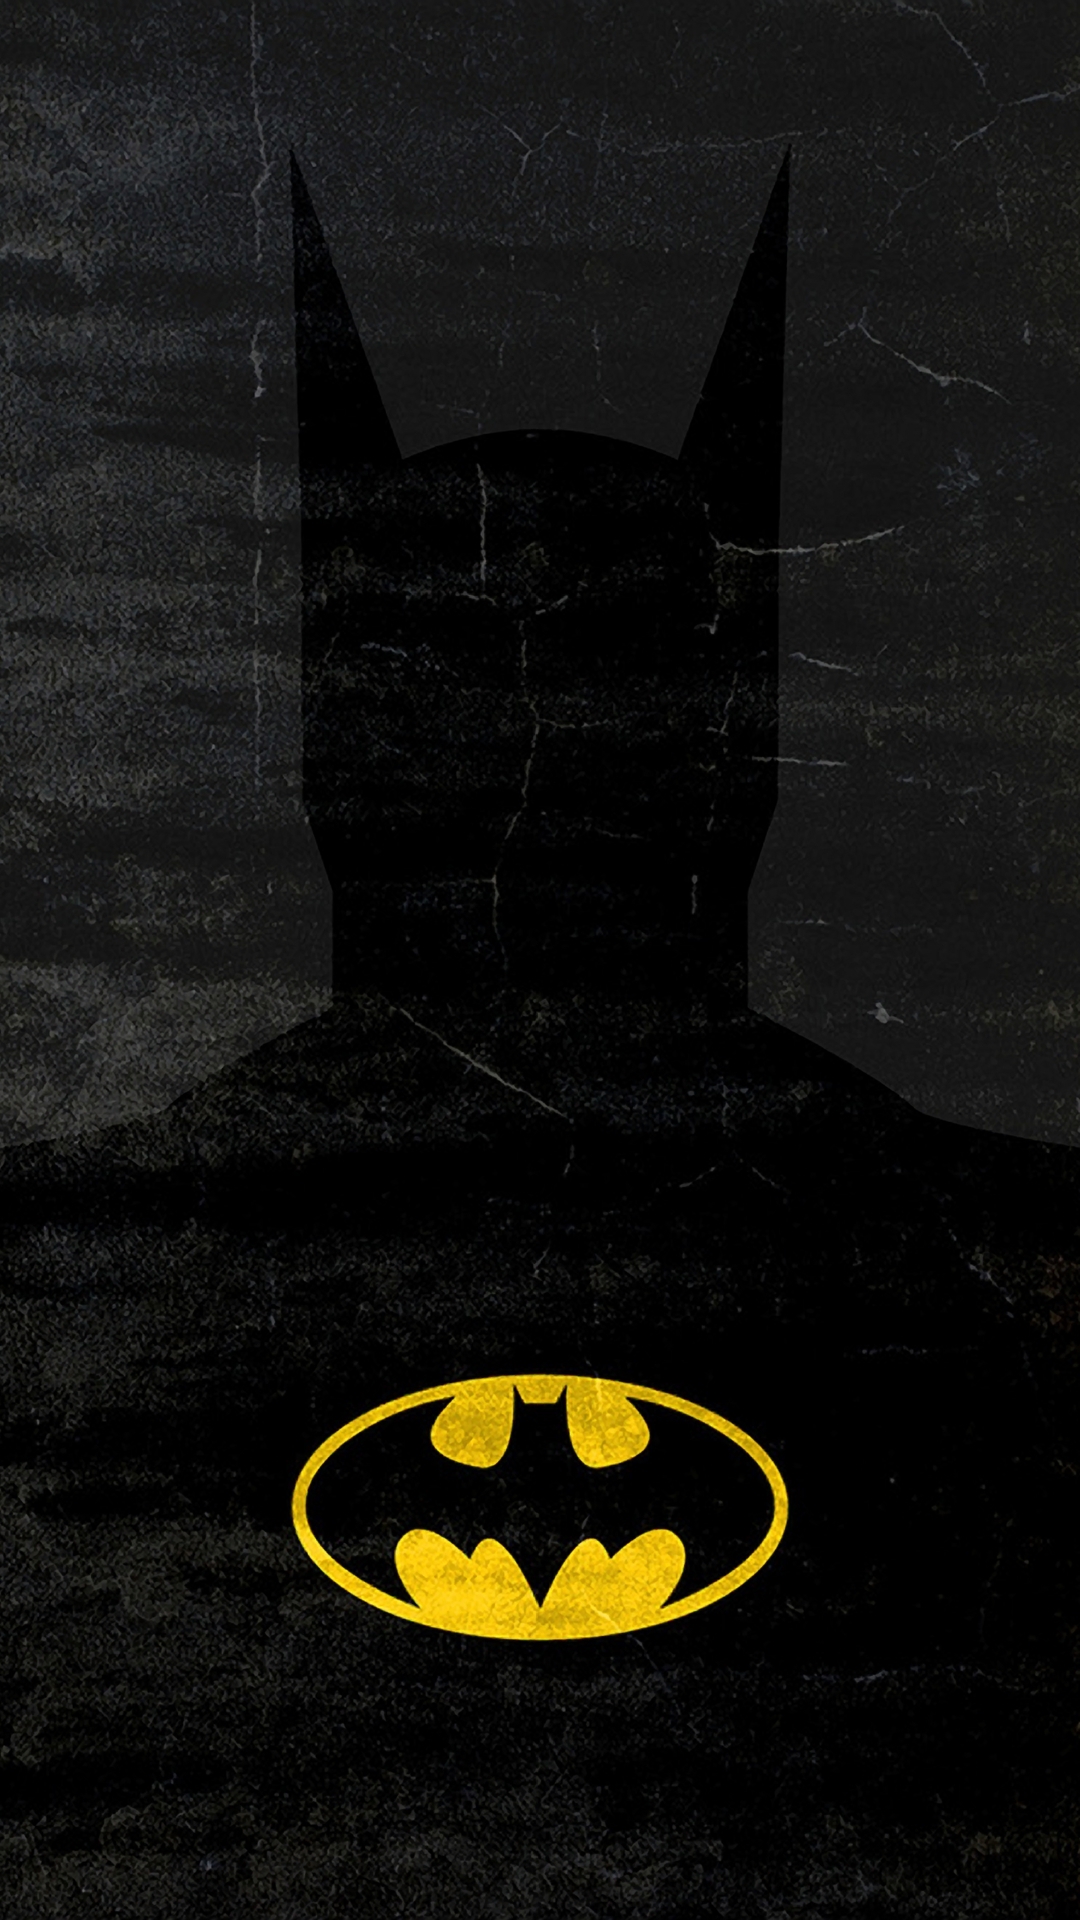 Batman wallpaper hd for android